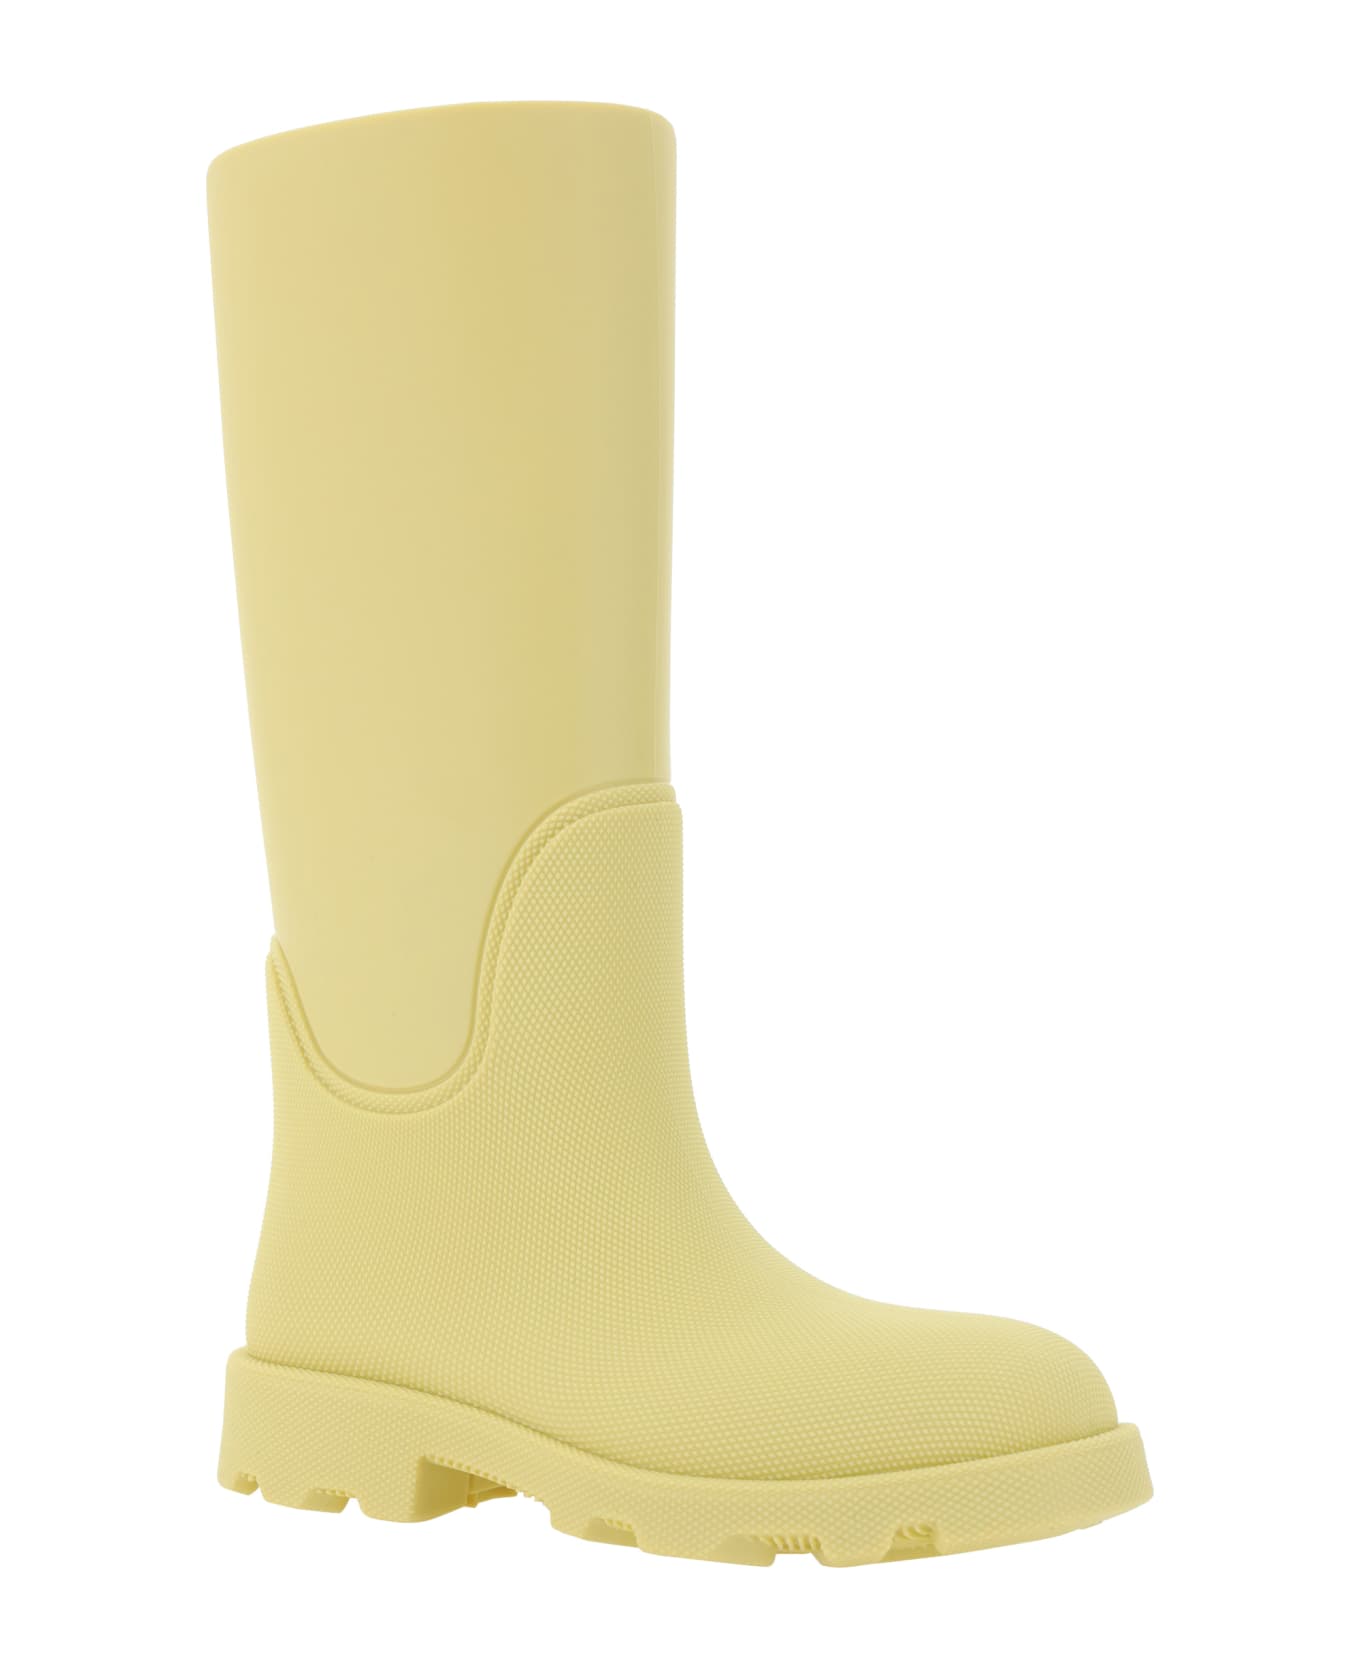 Burberry Marsh High Boots - Cream